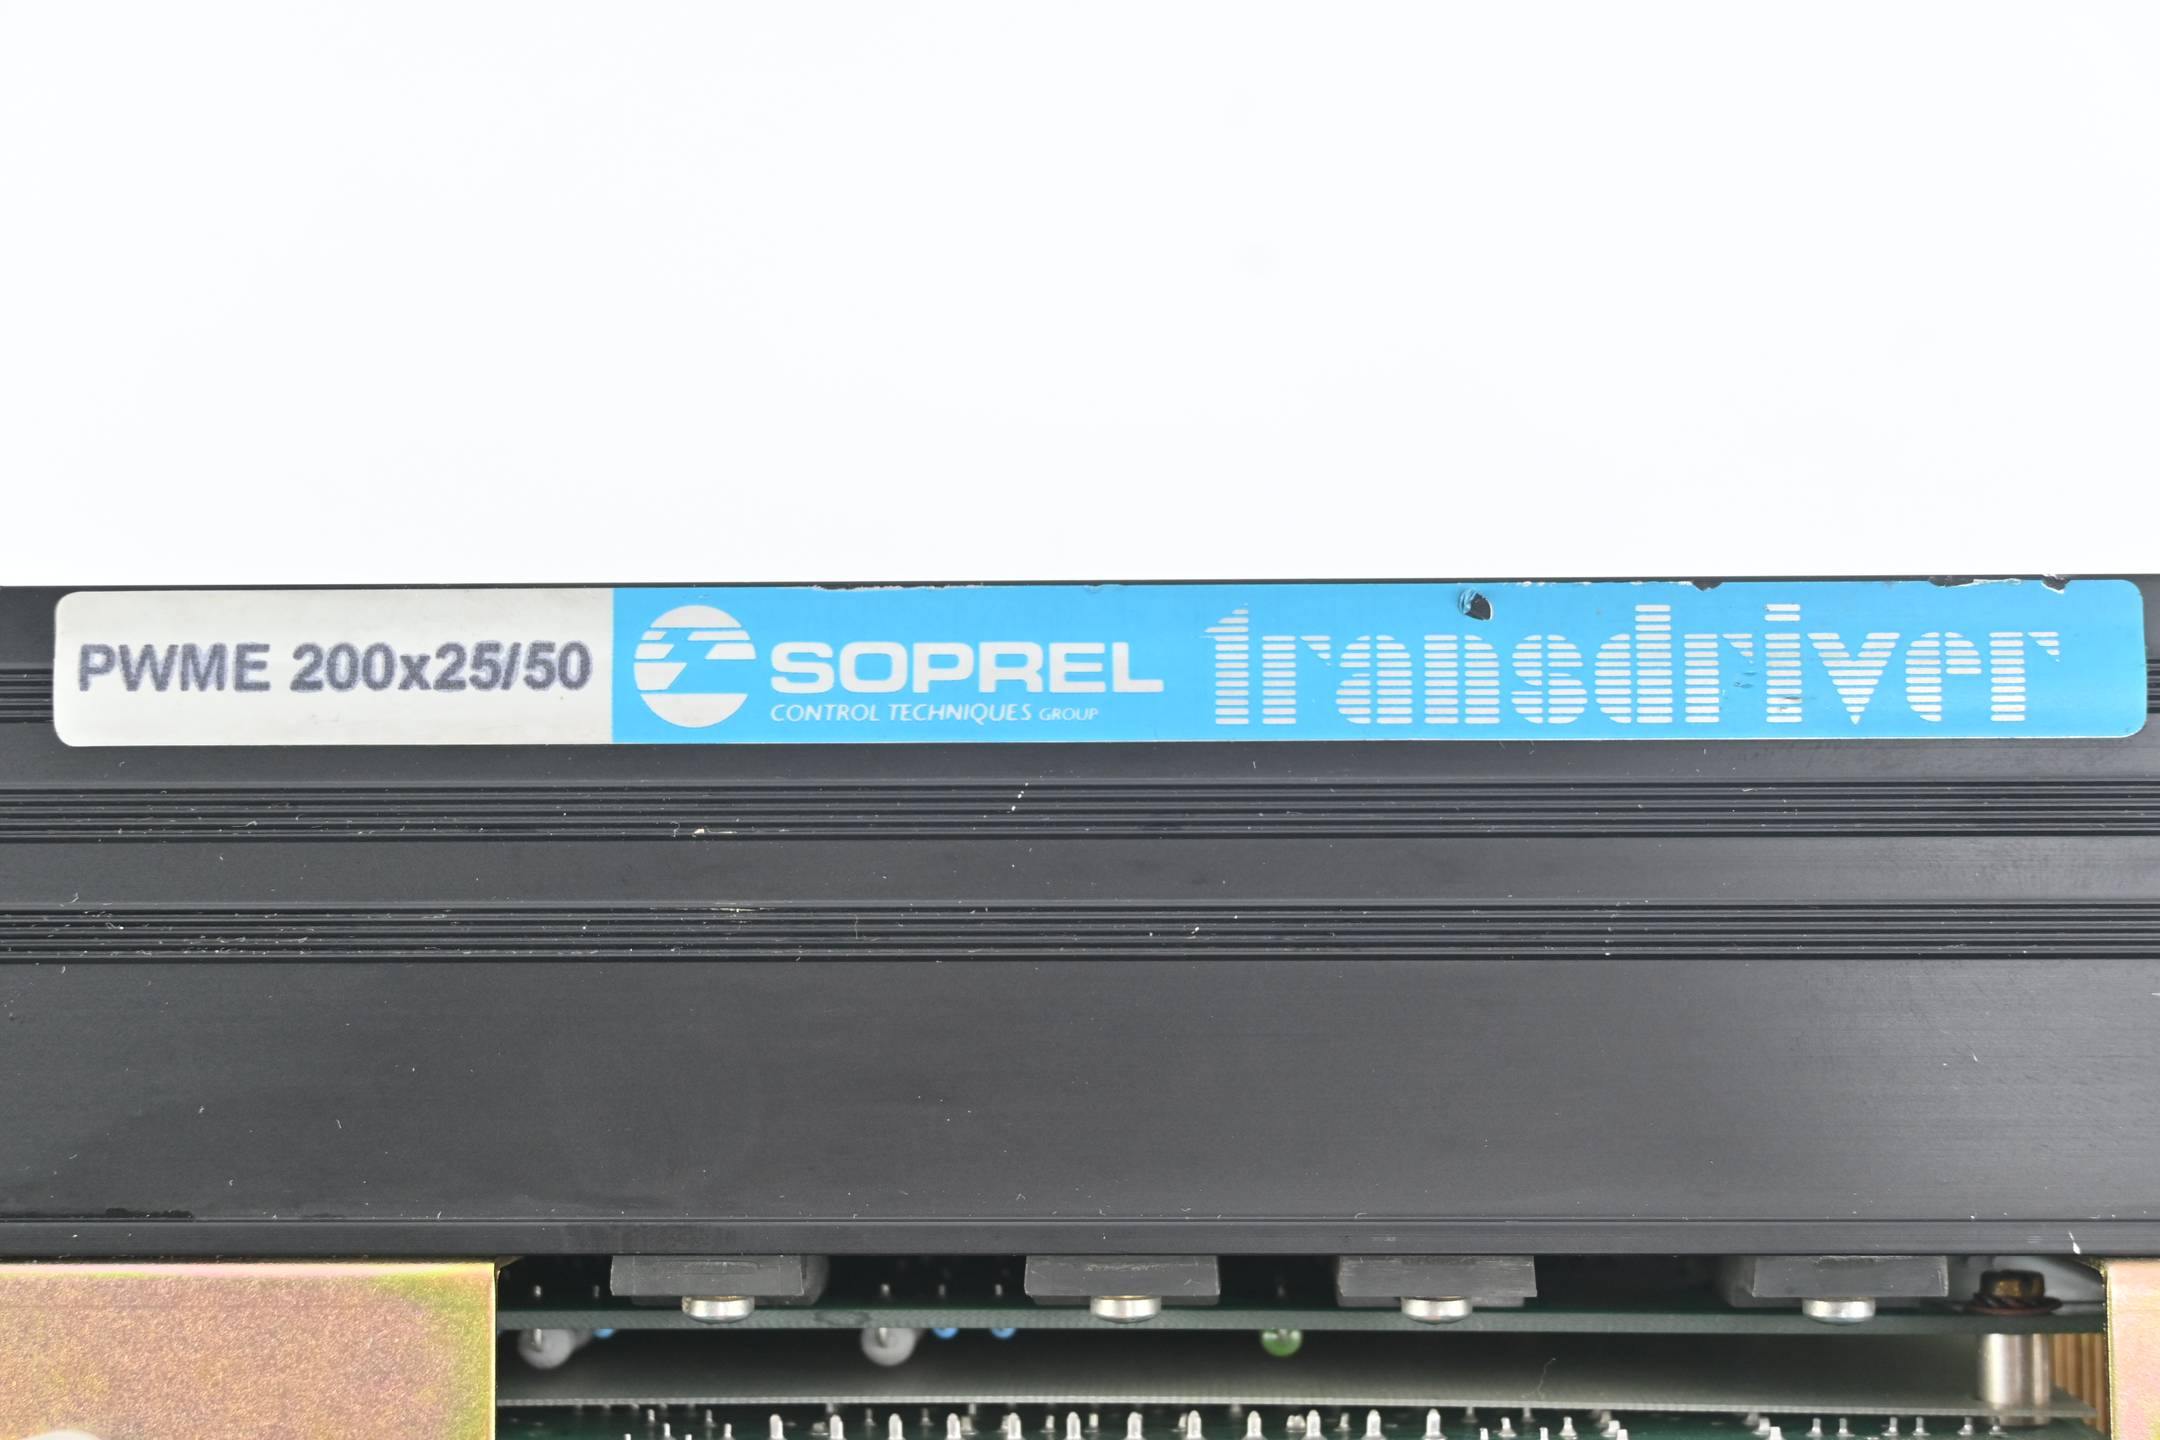 Soprel Transdriver PWME 200x25/50 ( PWME200x25/50 ) inkl. Halterung